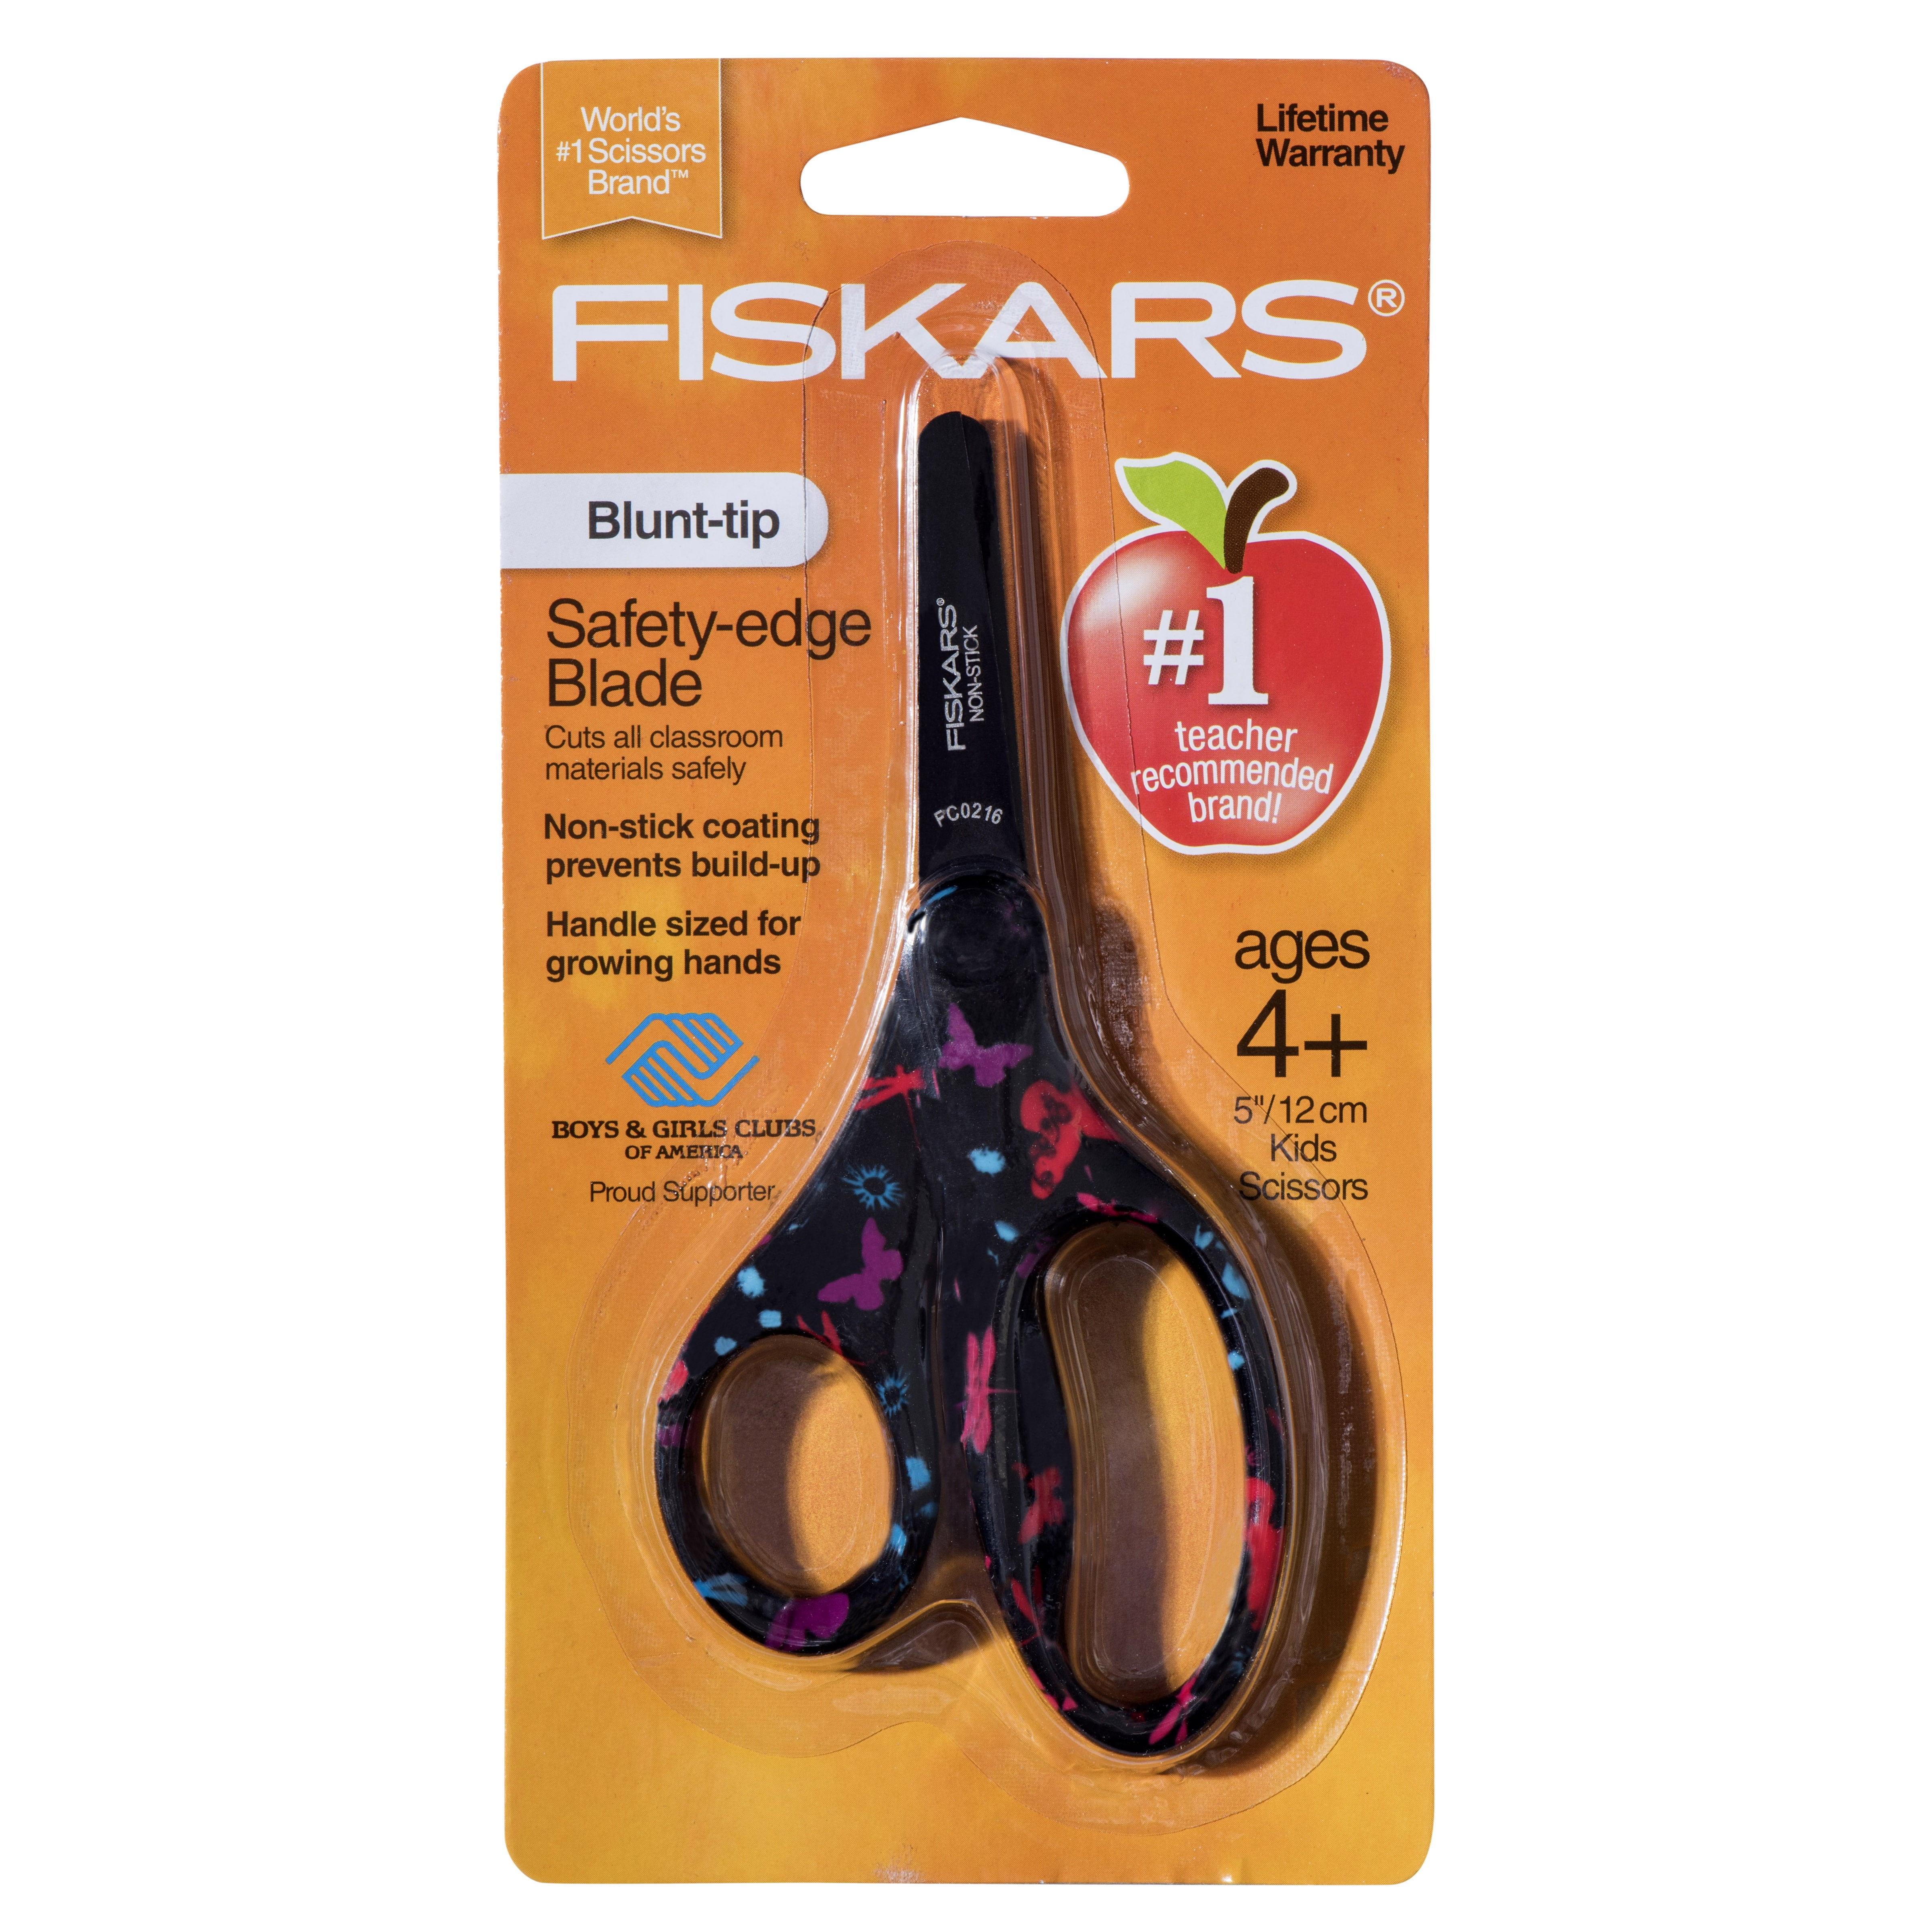 Fiskars Schoolworks 5 Kids Scissors (105580-1004)